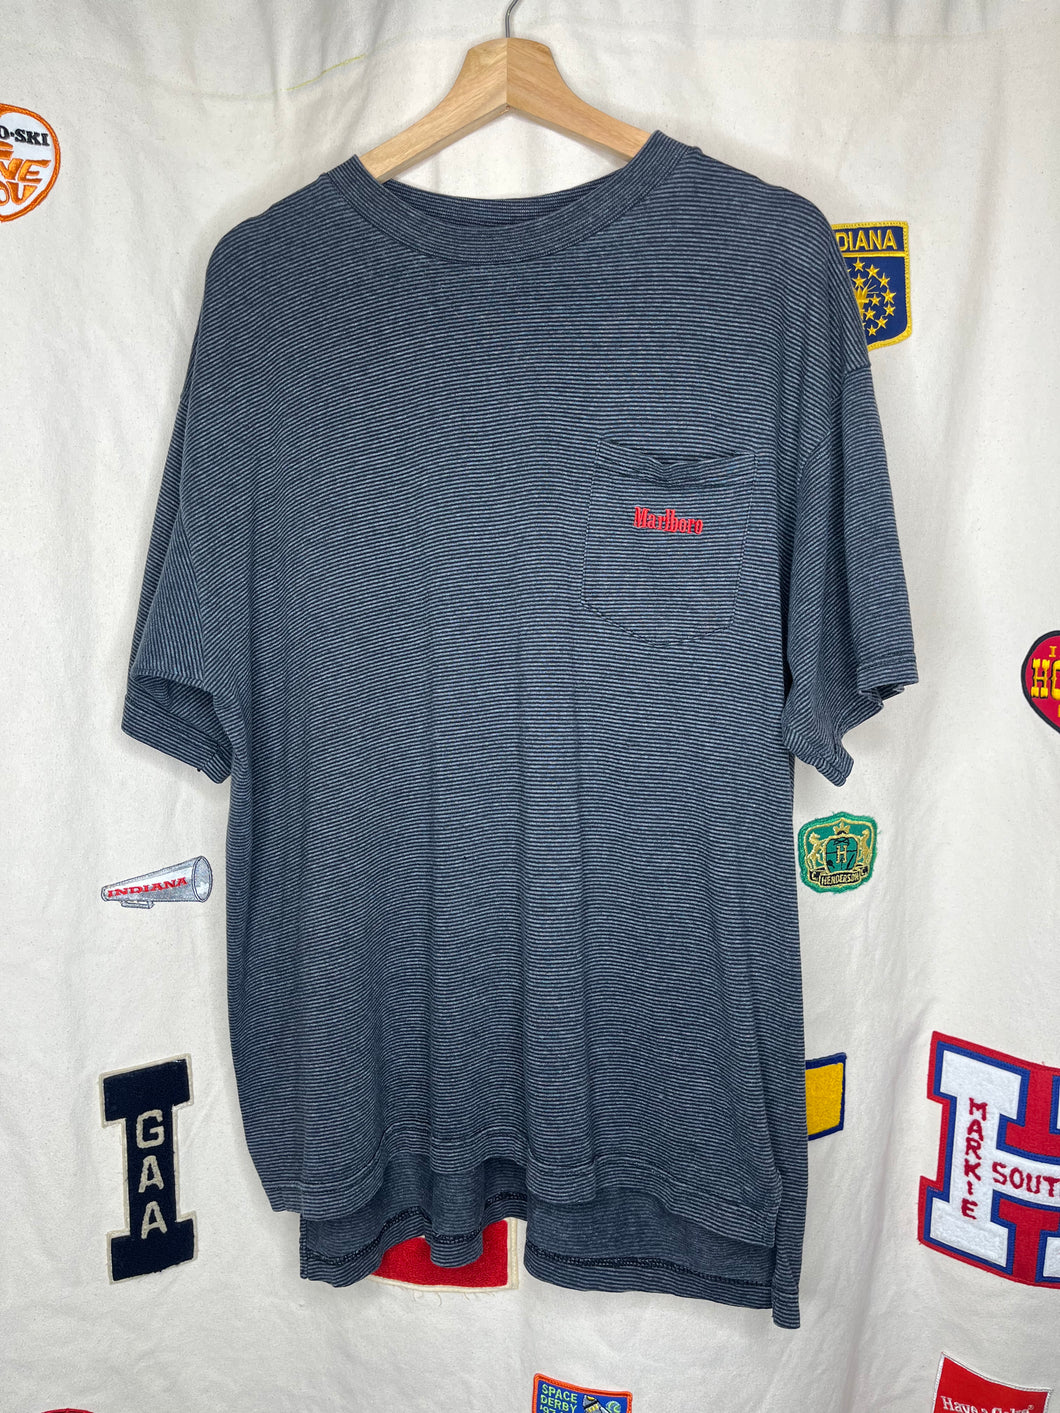 Vintage Marlboro Cigarette Grey Striped Embroidered Pocket T-Shirt: L/XL